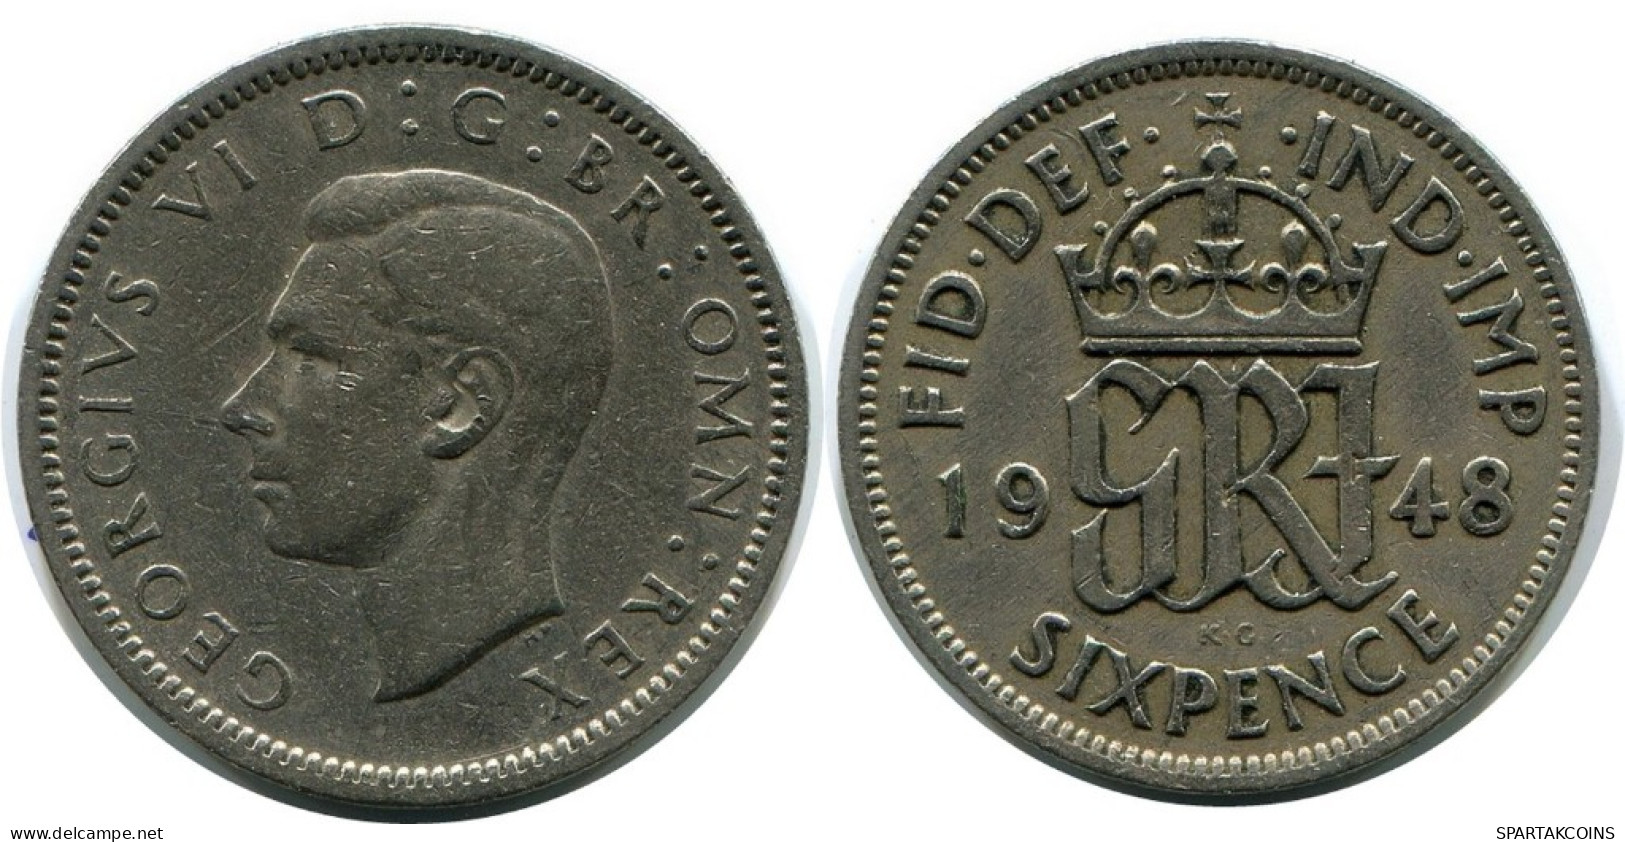 SIXPENCE 1948 UK GROßBRITANNIEN GREAT BRITAIN Münze #AN506.D.A - H. 6 Pence